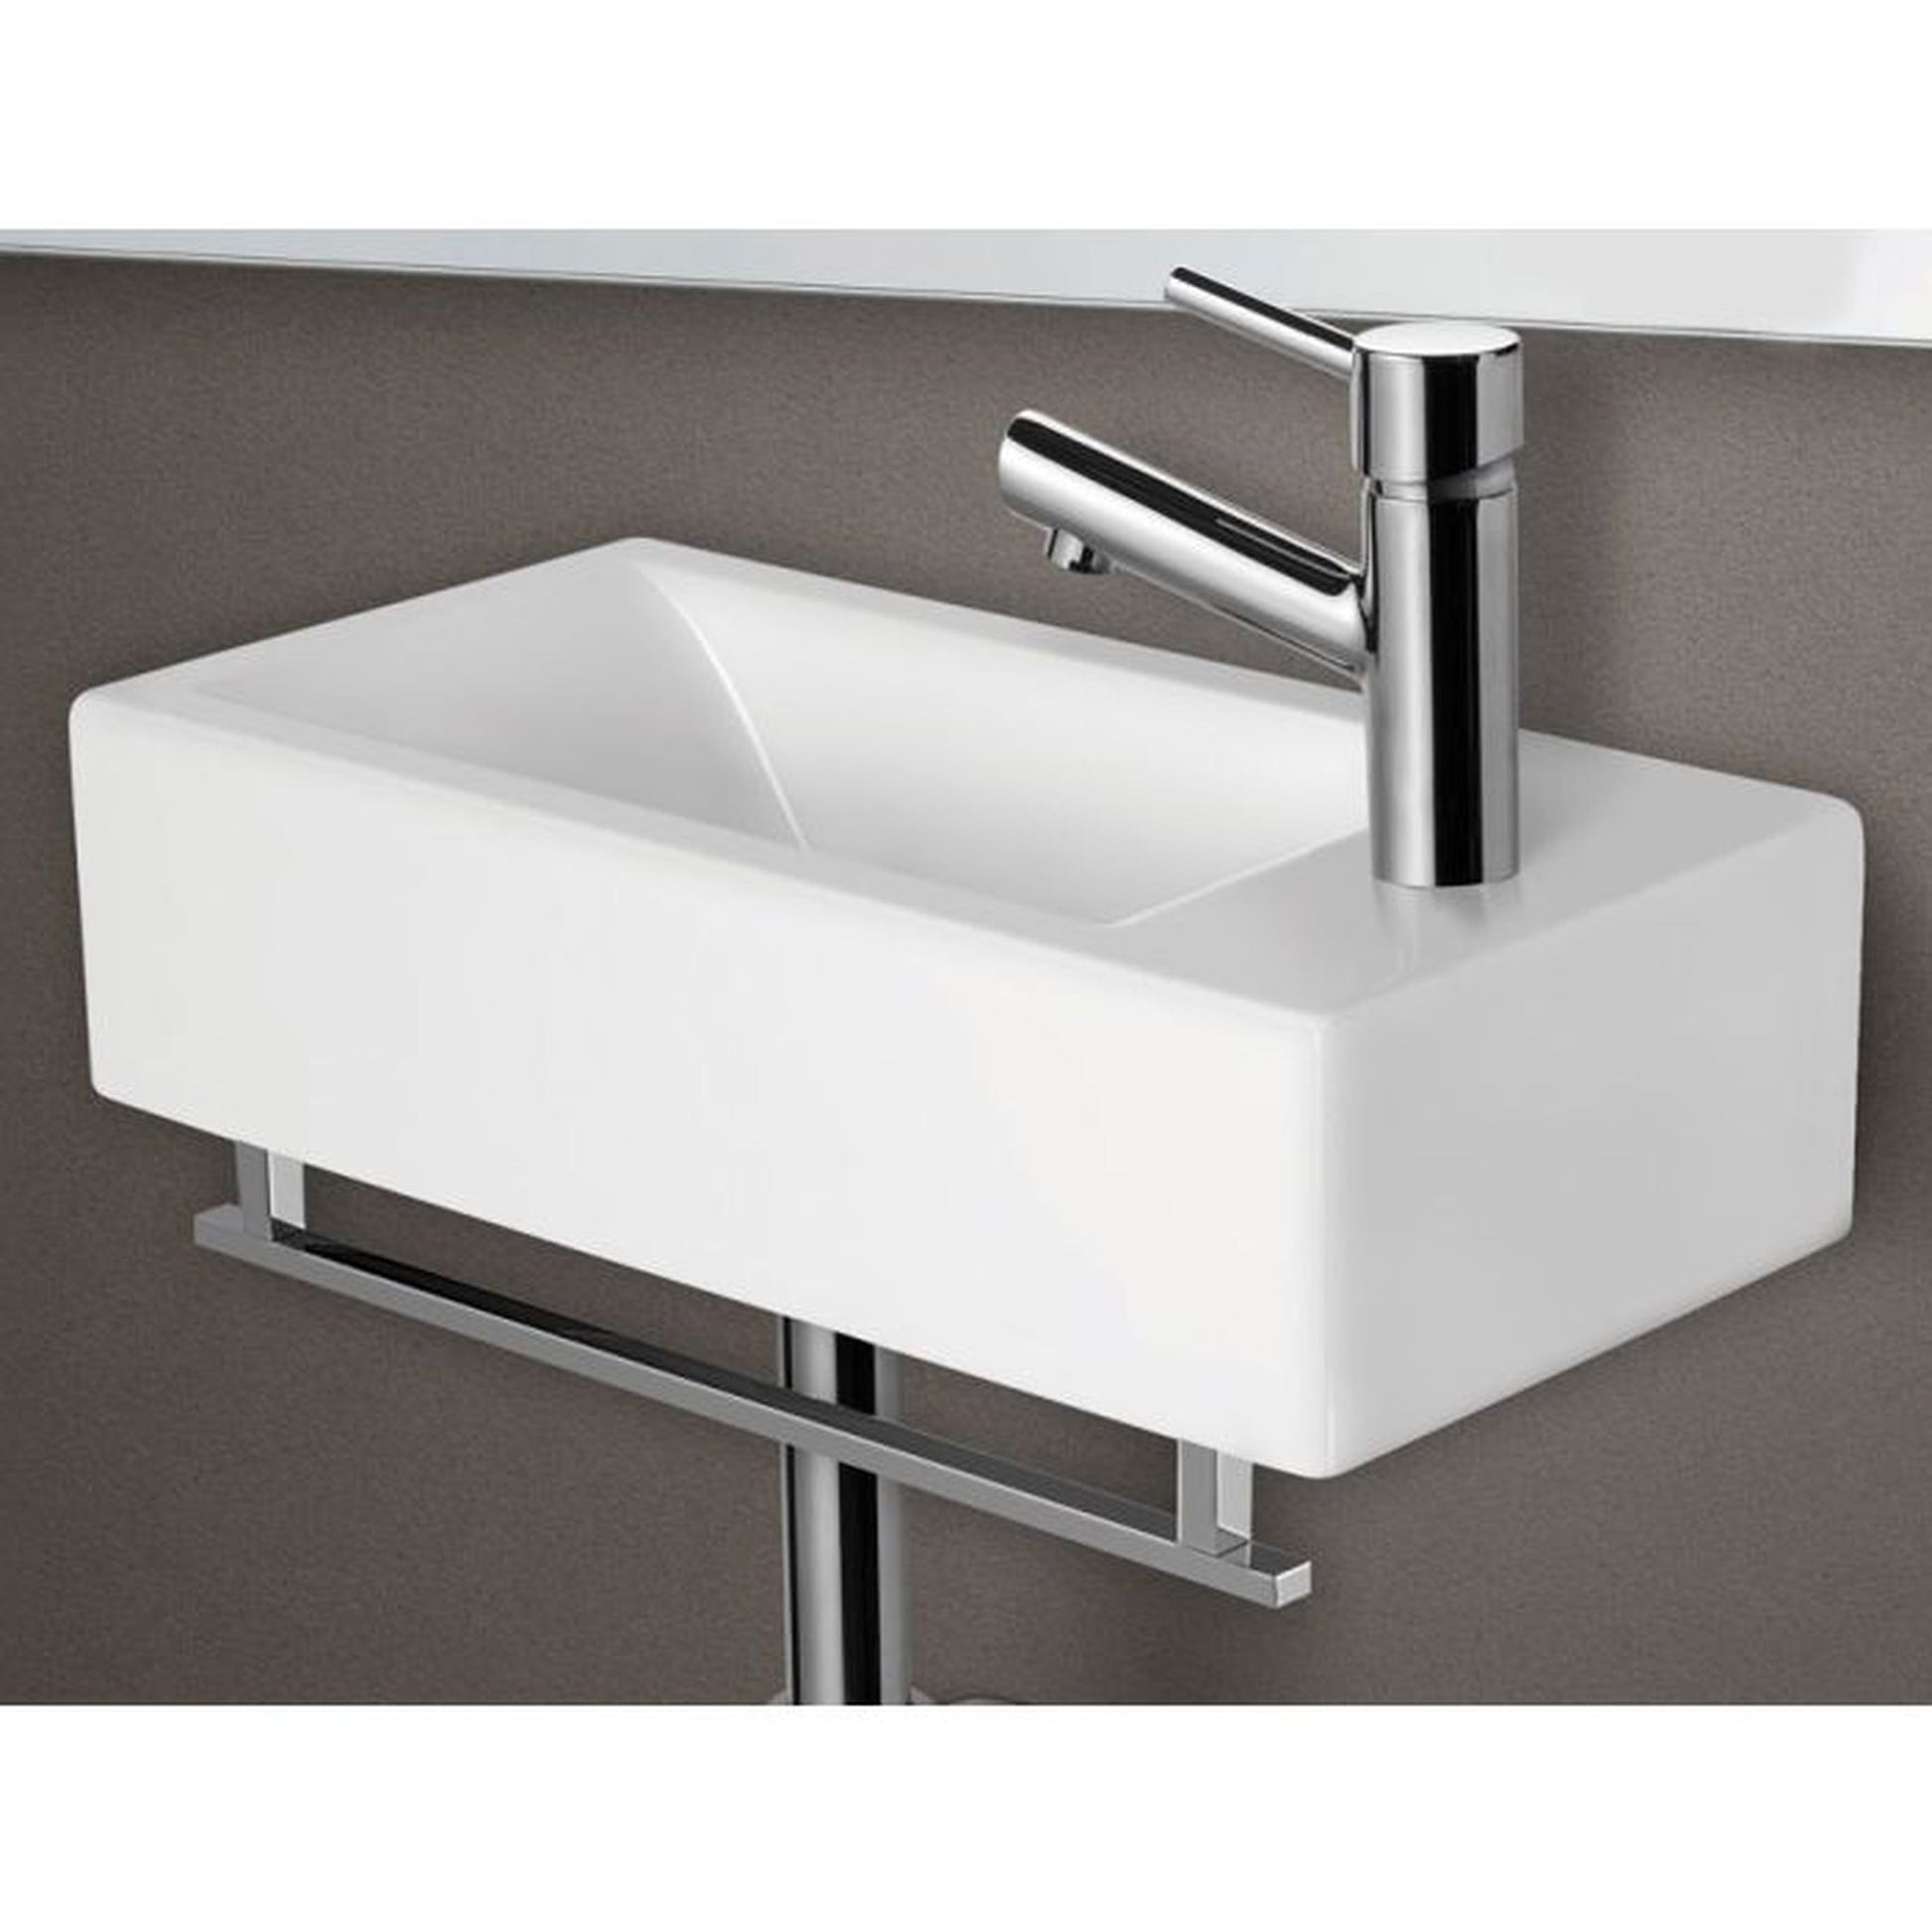 ALFI Brand AB108TB 17" Chrome Squared Towel Bar Addition to the AB108 Bathroom Sink